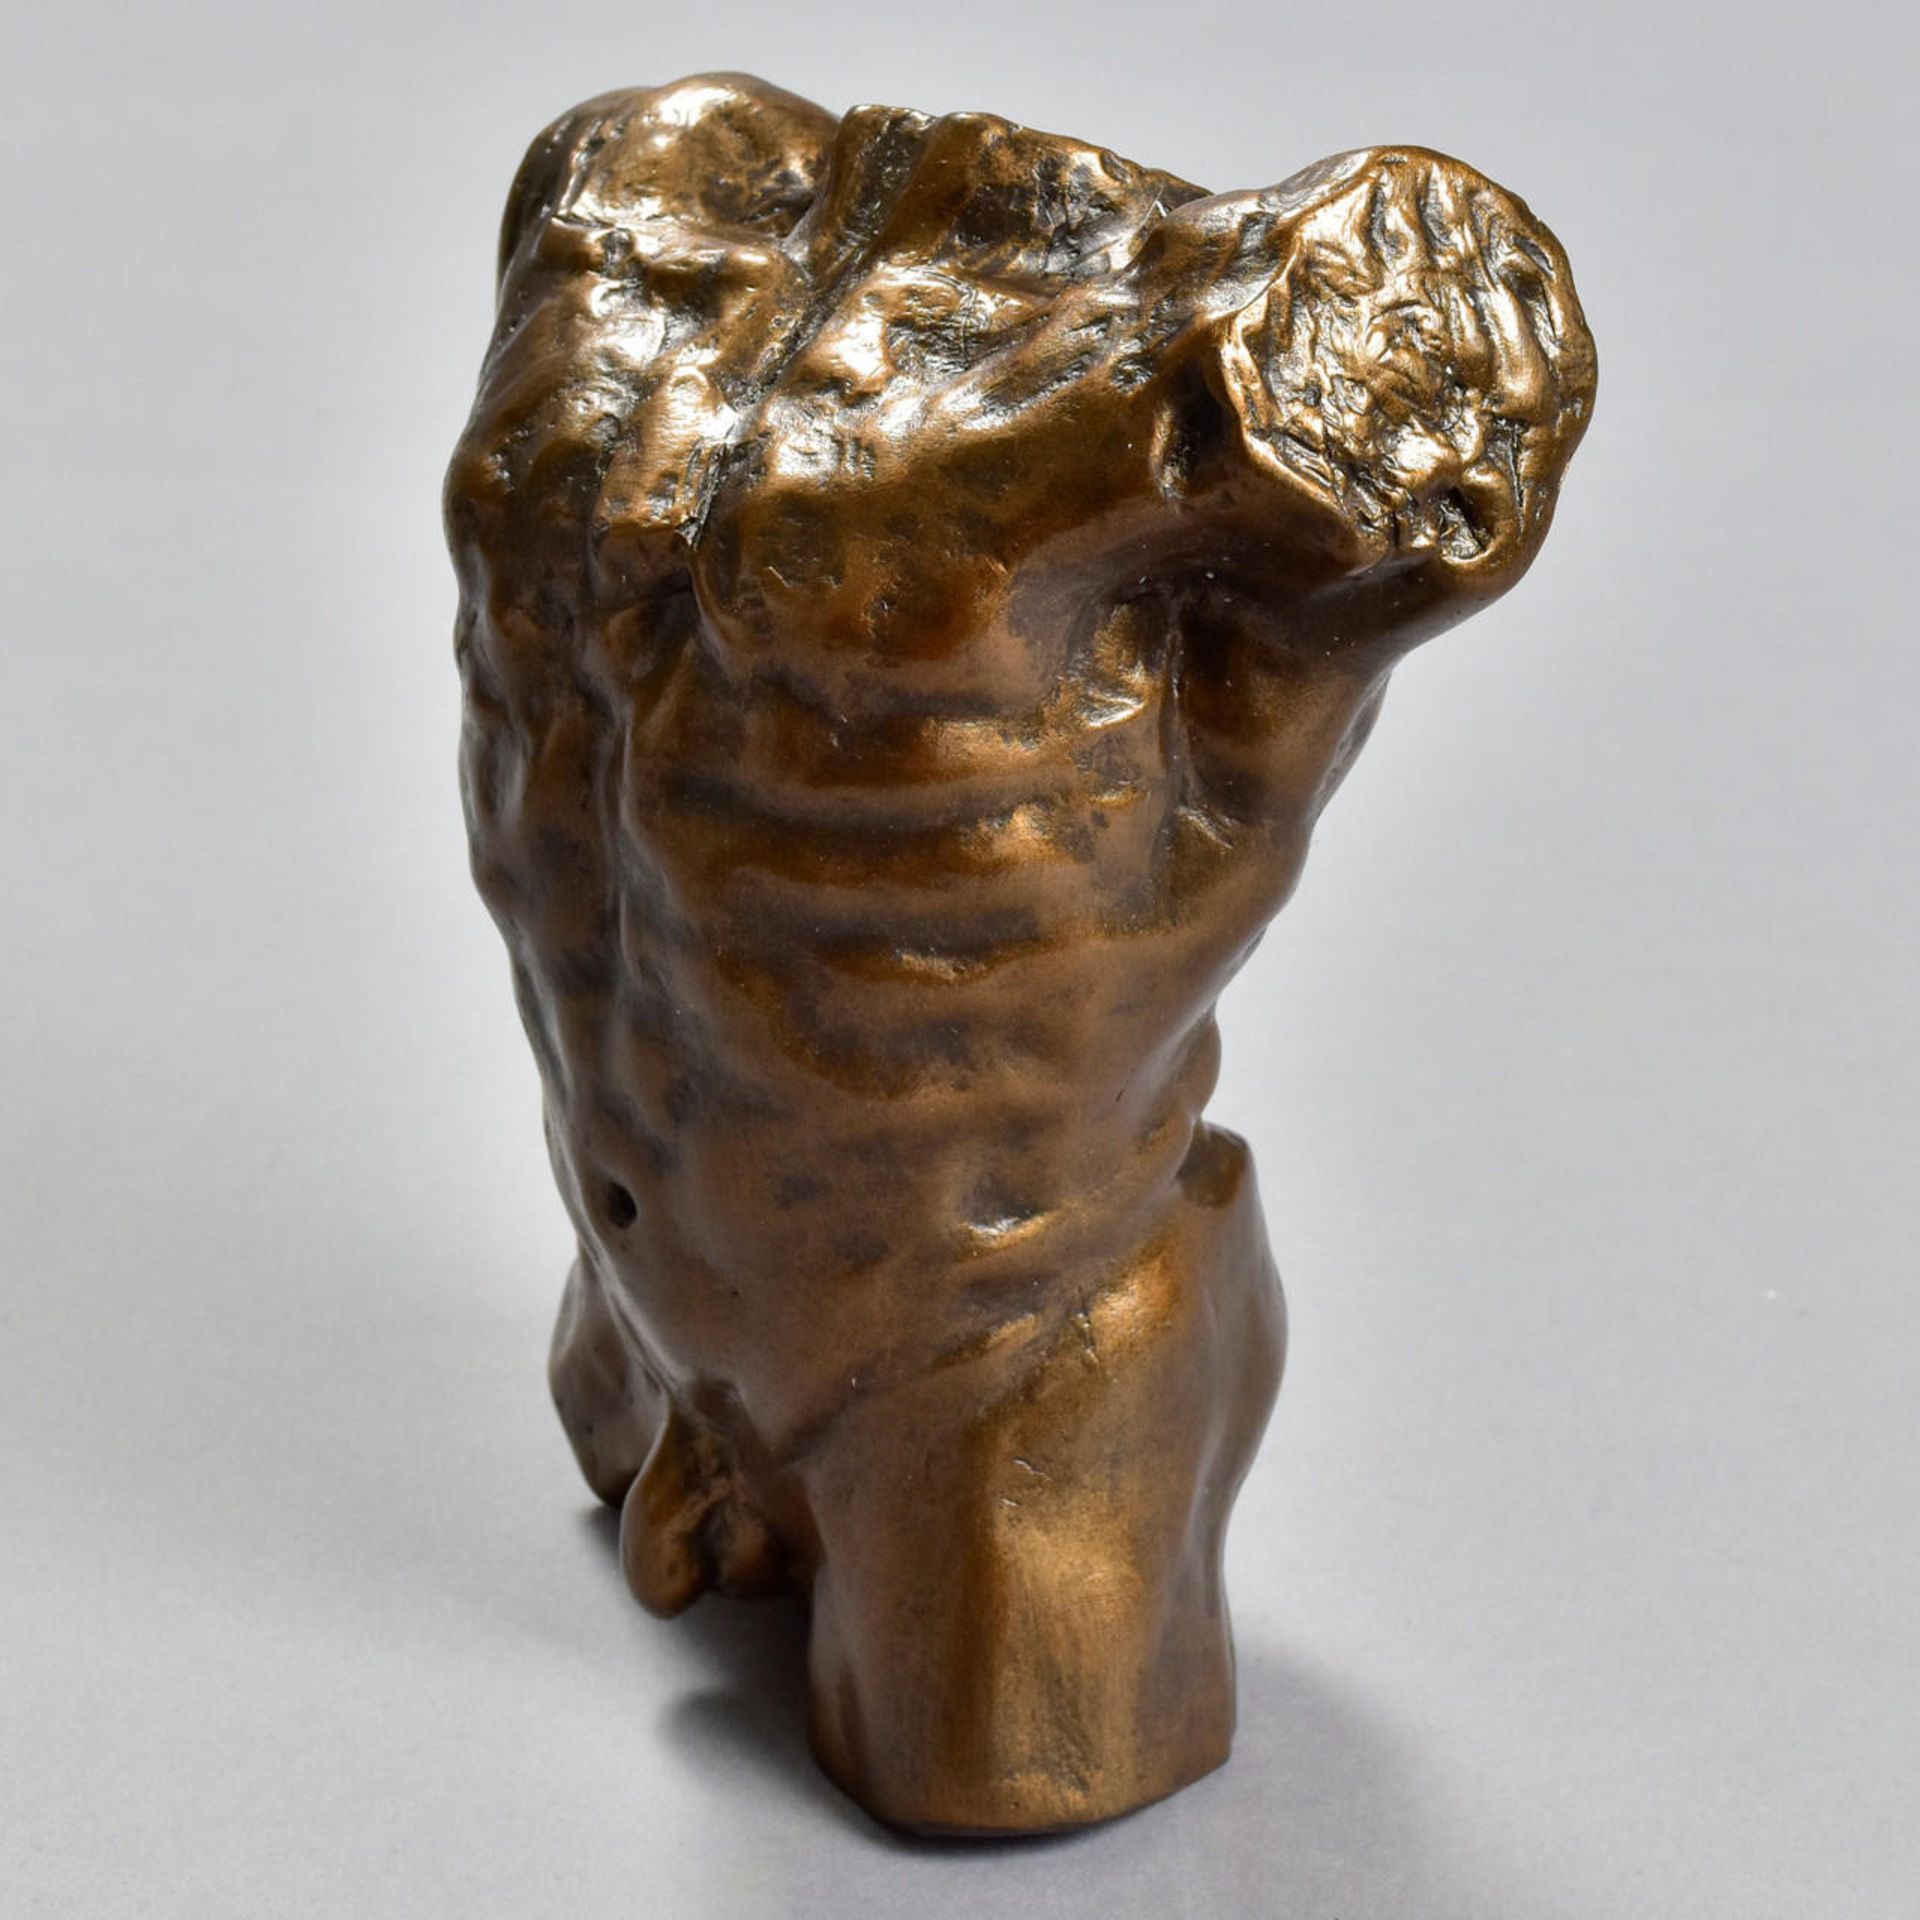 Auguste Rodin "Torso" Sculpture